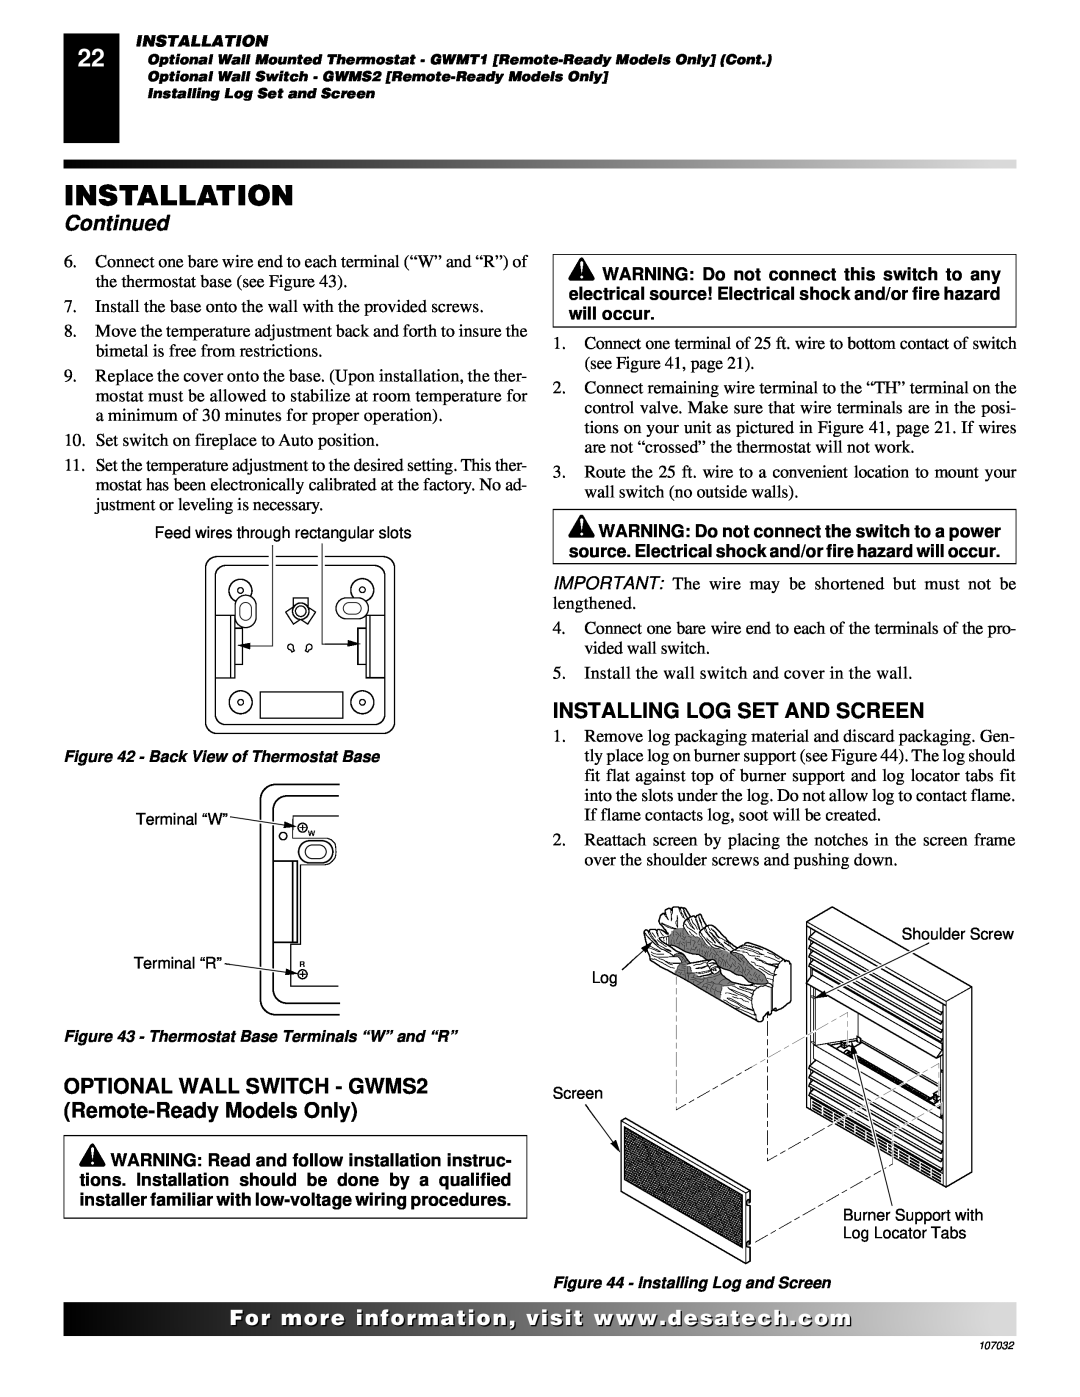 Desa VMH10TPB installation manual Installing Log Set And Screen, Installation, Continued 